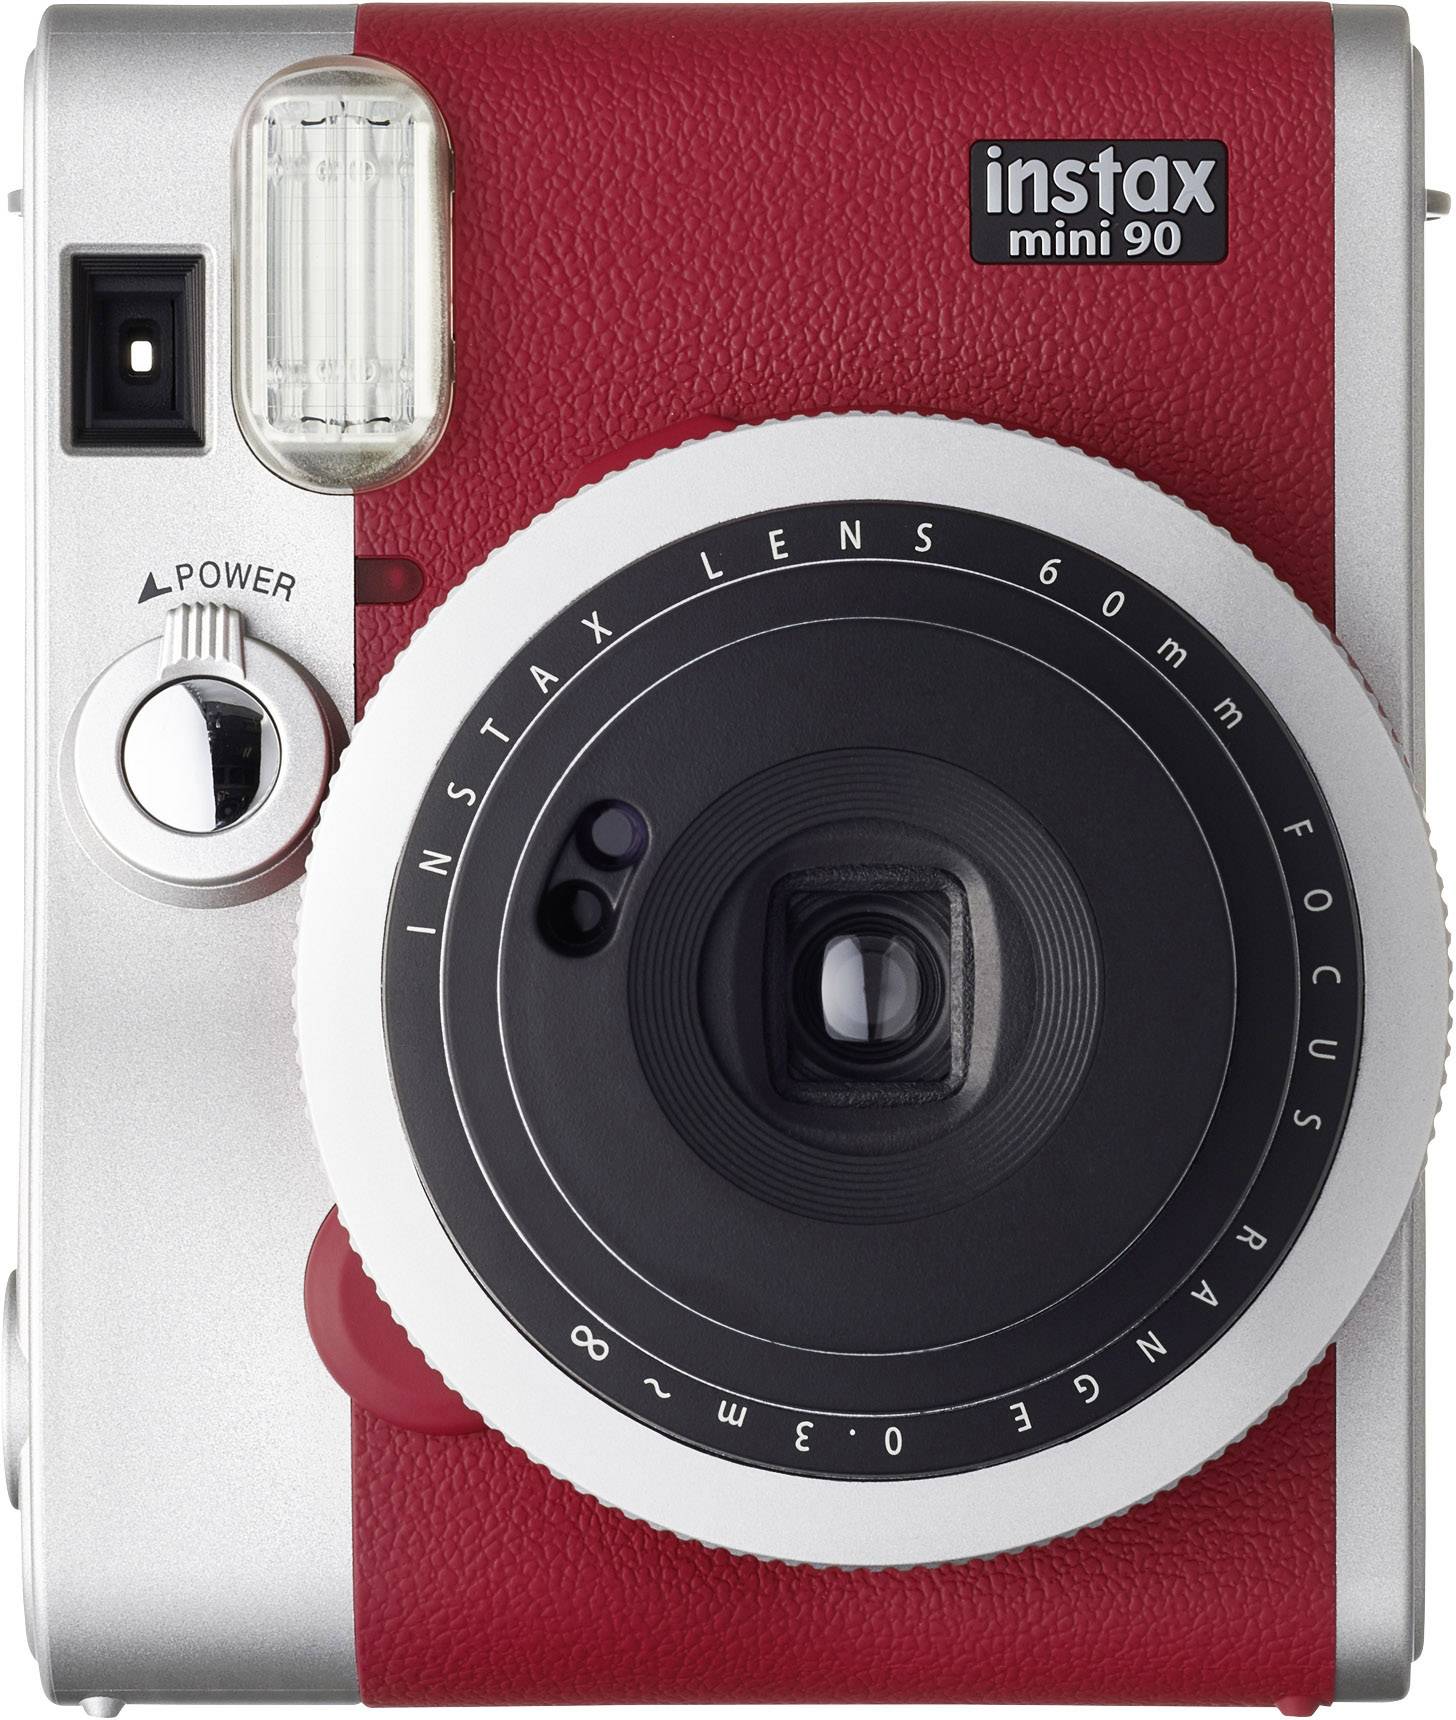 Afhankelijkheid blaas gat Verslinden Fujifilm Instax Mini 90 Neo Red Instant camera Red, Silver Optical  viewfinder, Built-in flash | Conrad.com